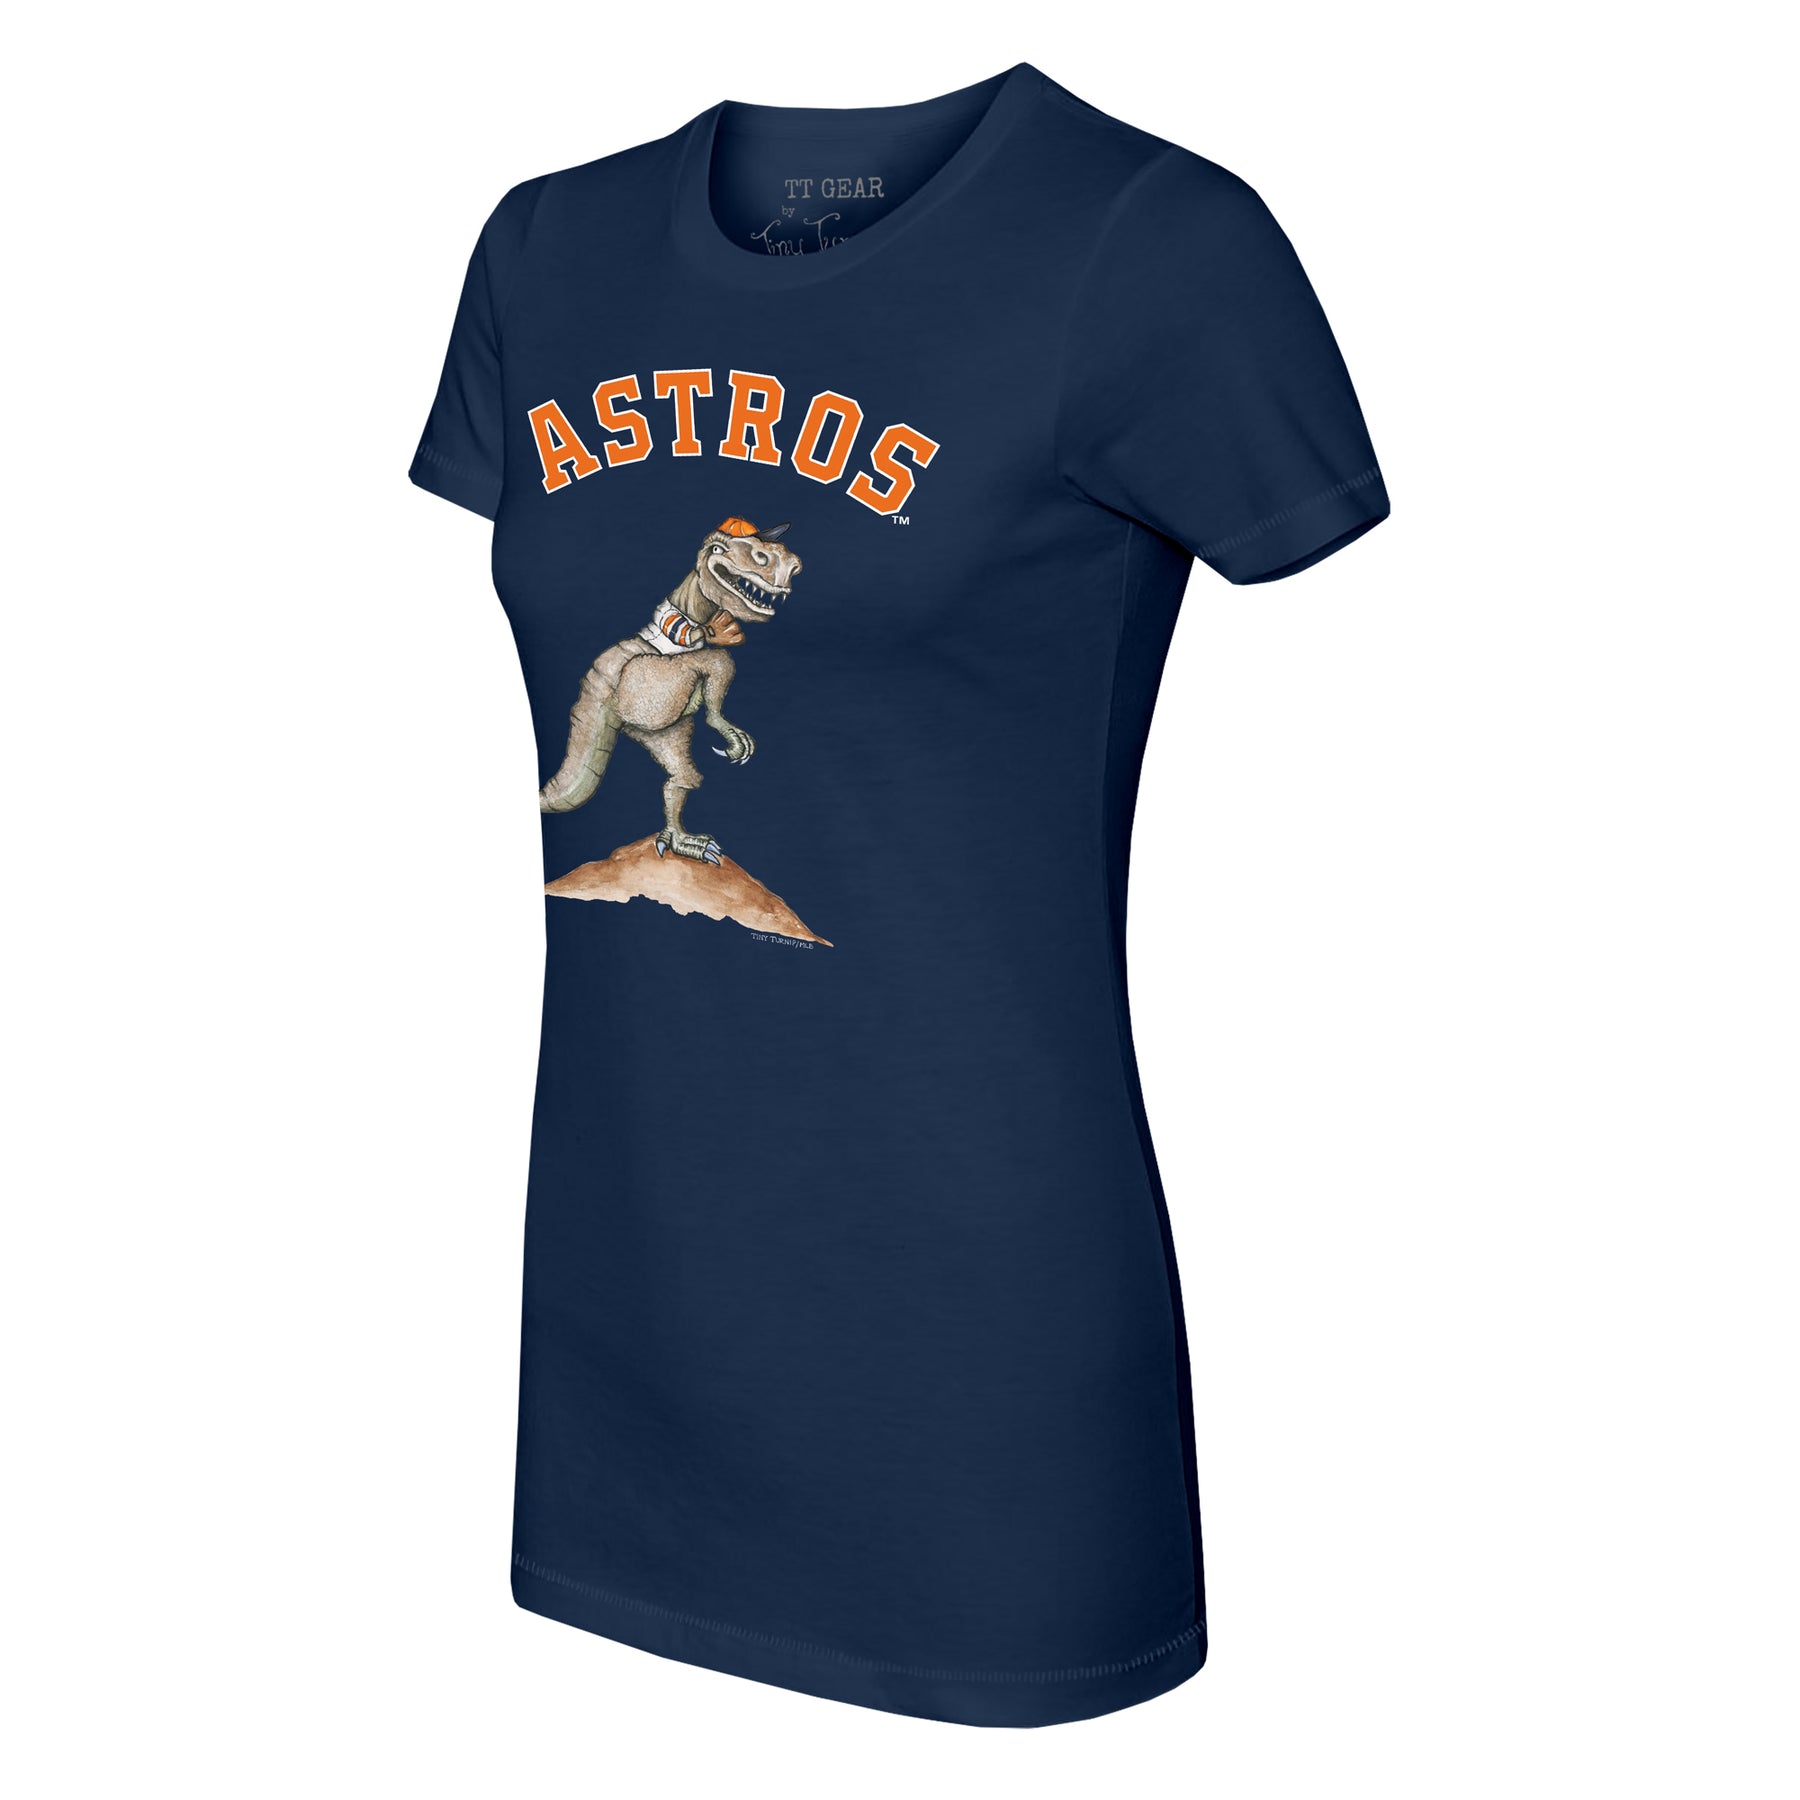 Women's Houston Astros New Era Gear, Womens Astros Apparel